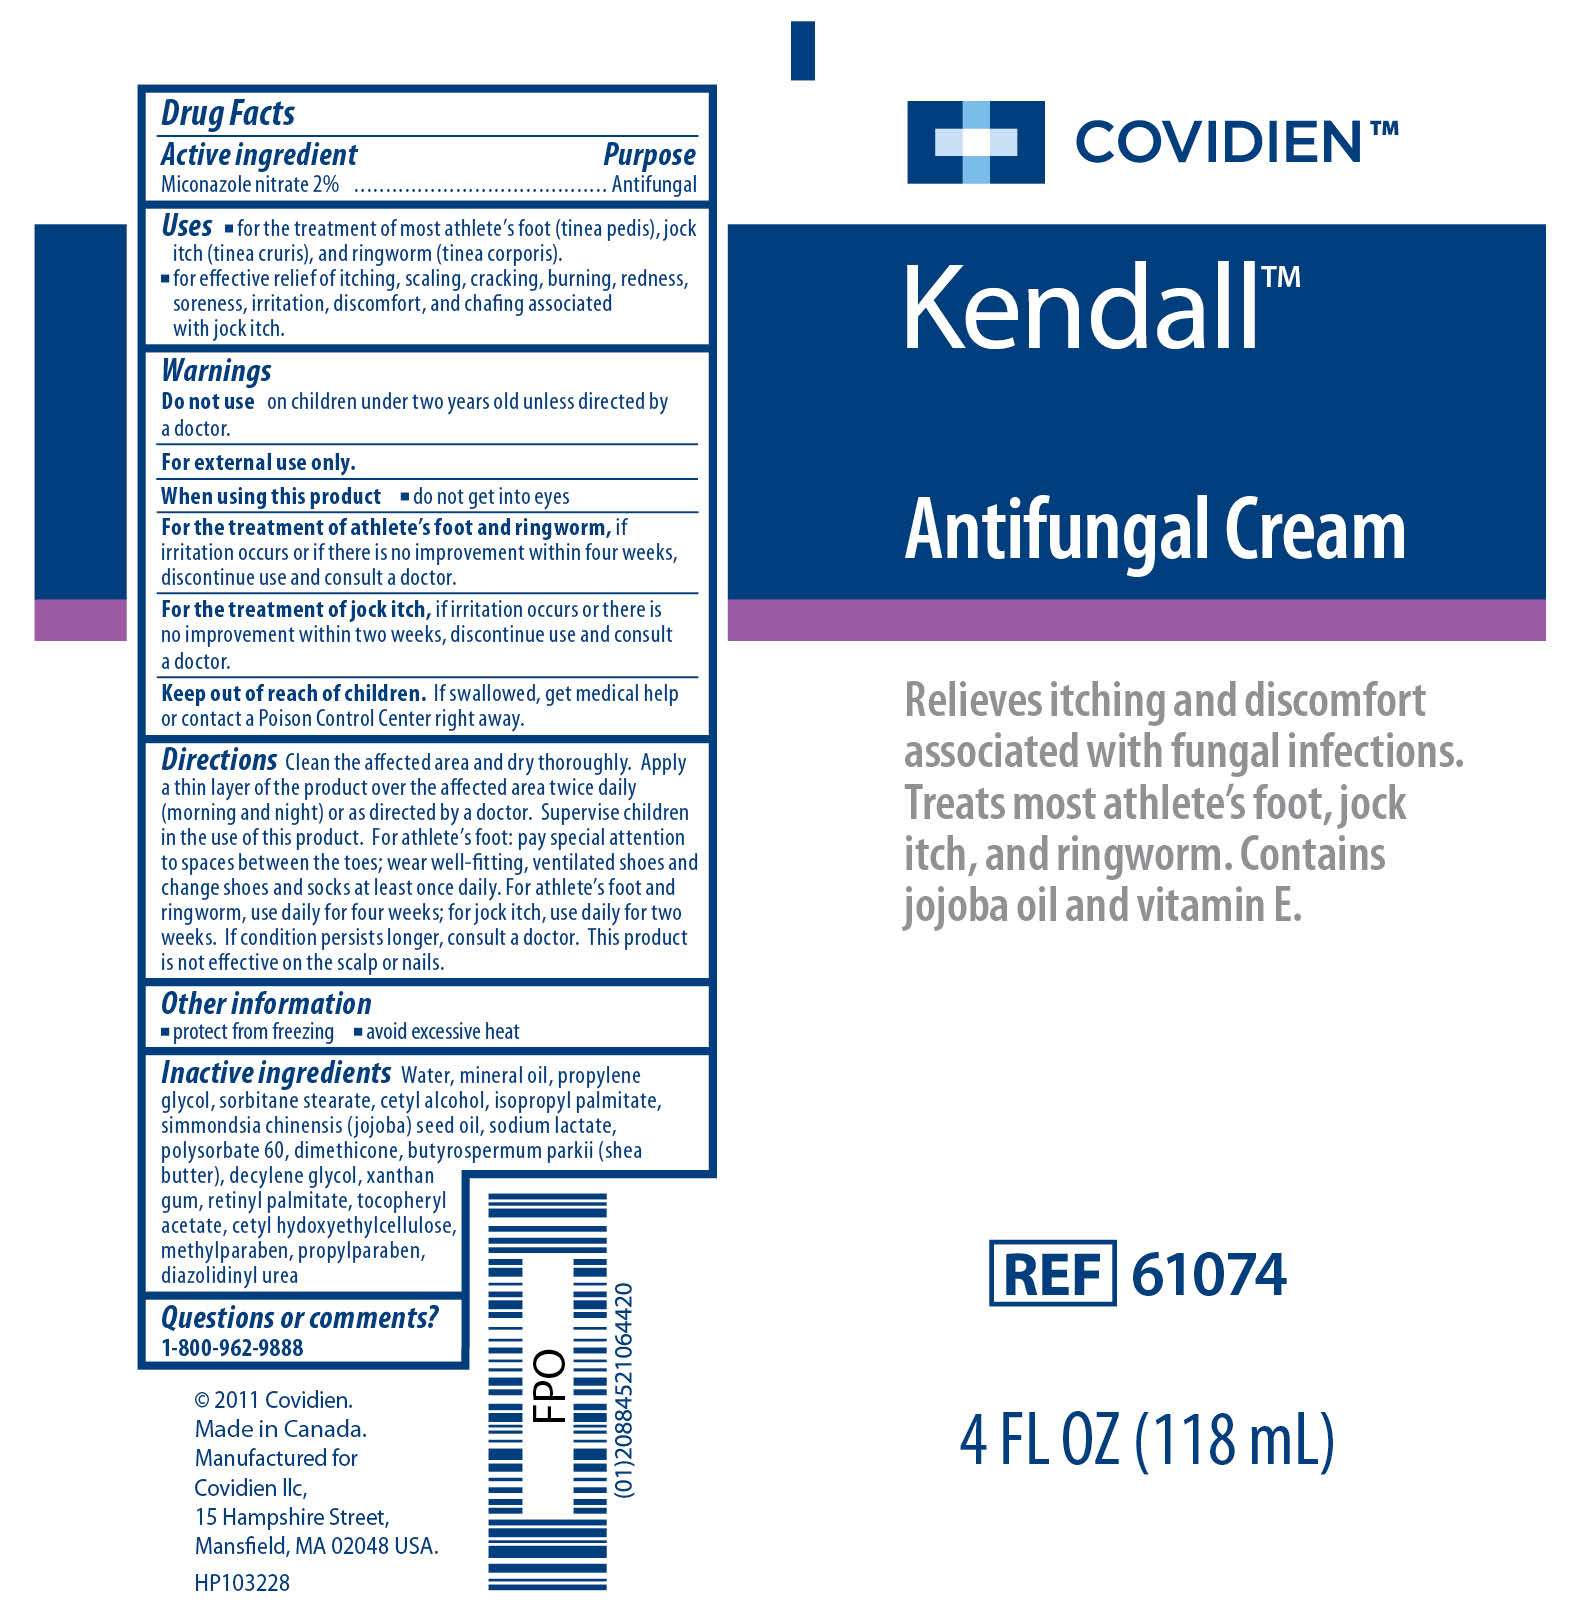 Kendall Antifungal